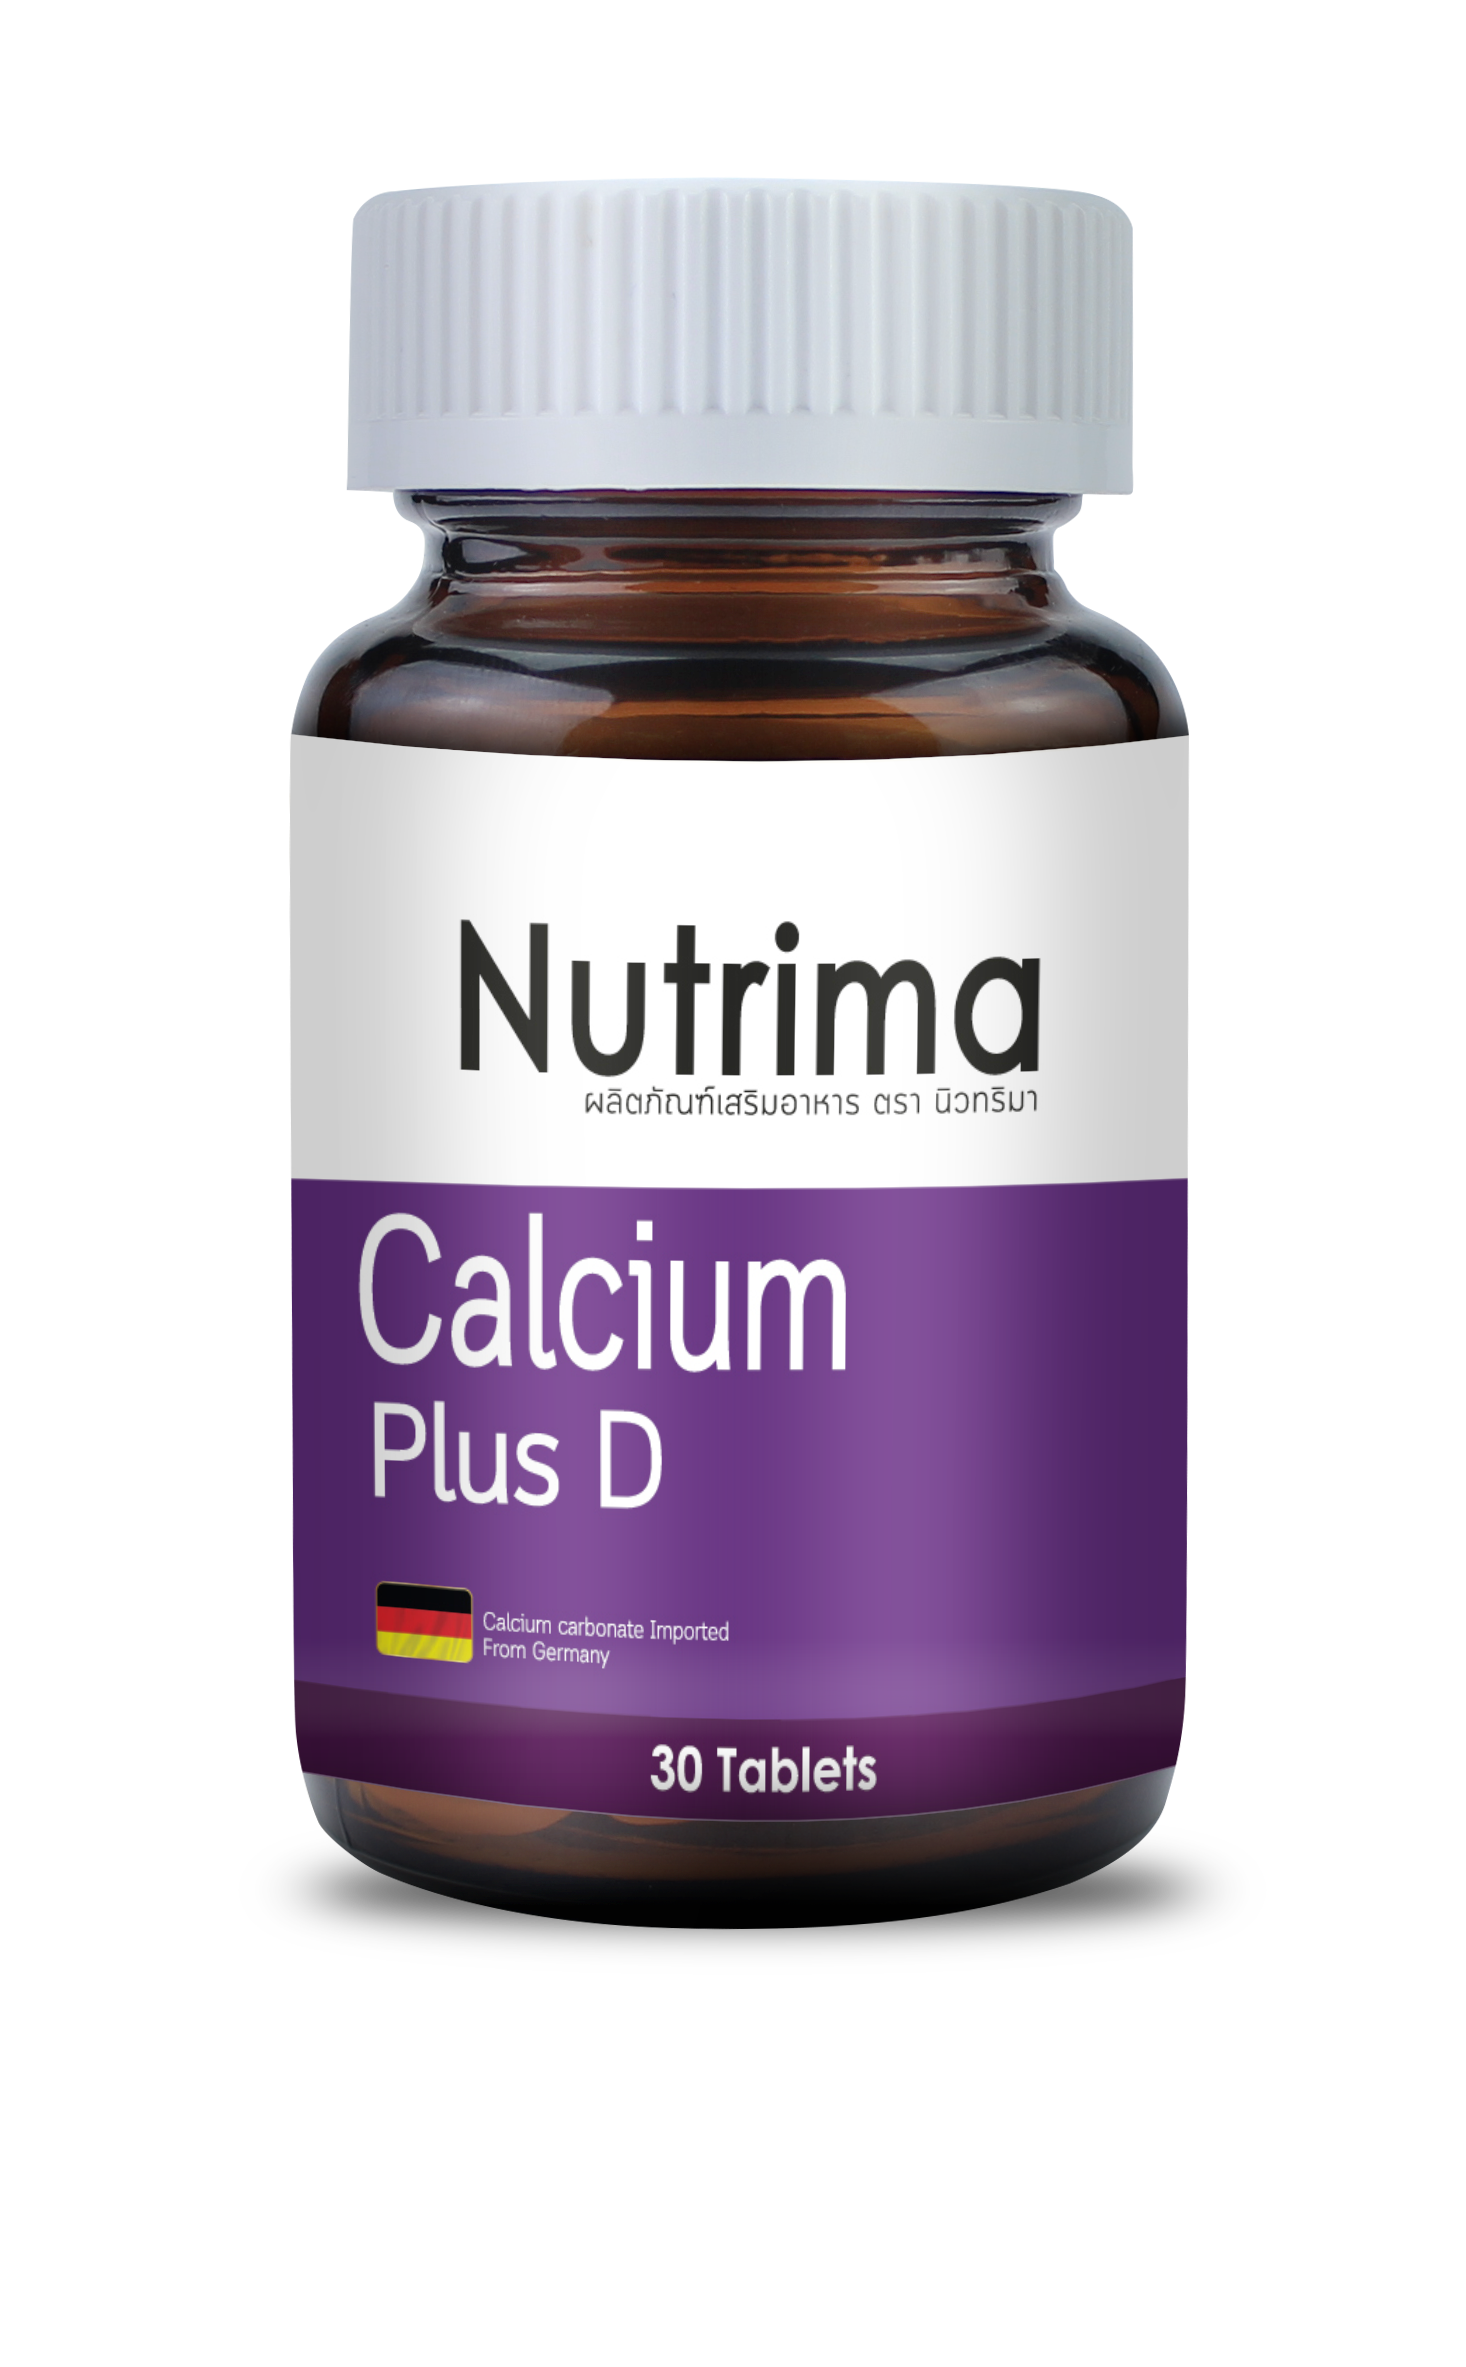 Images/Blog/wlXBOpcb-NEW TD Nutrima Calcium Plus D.png